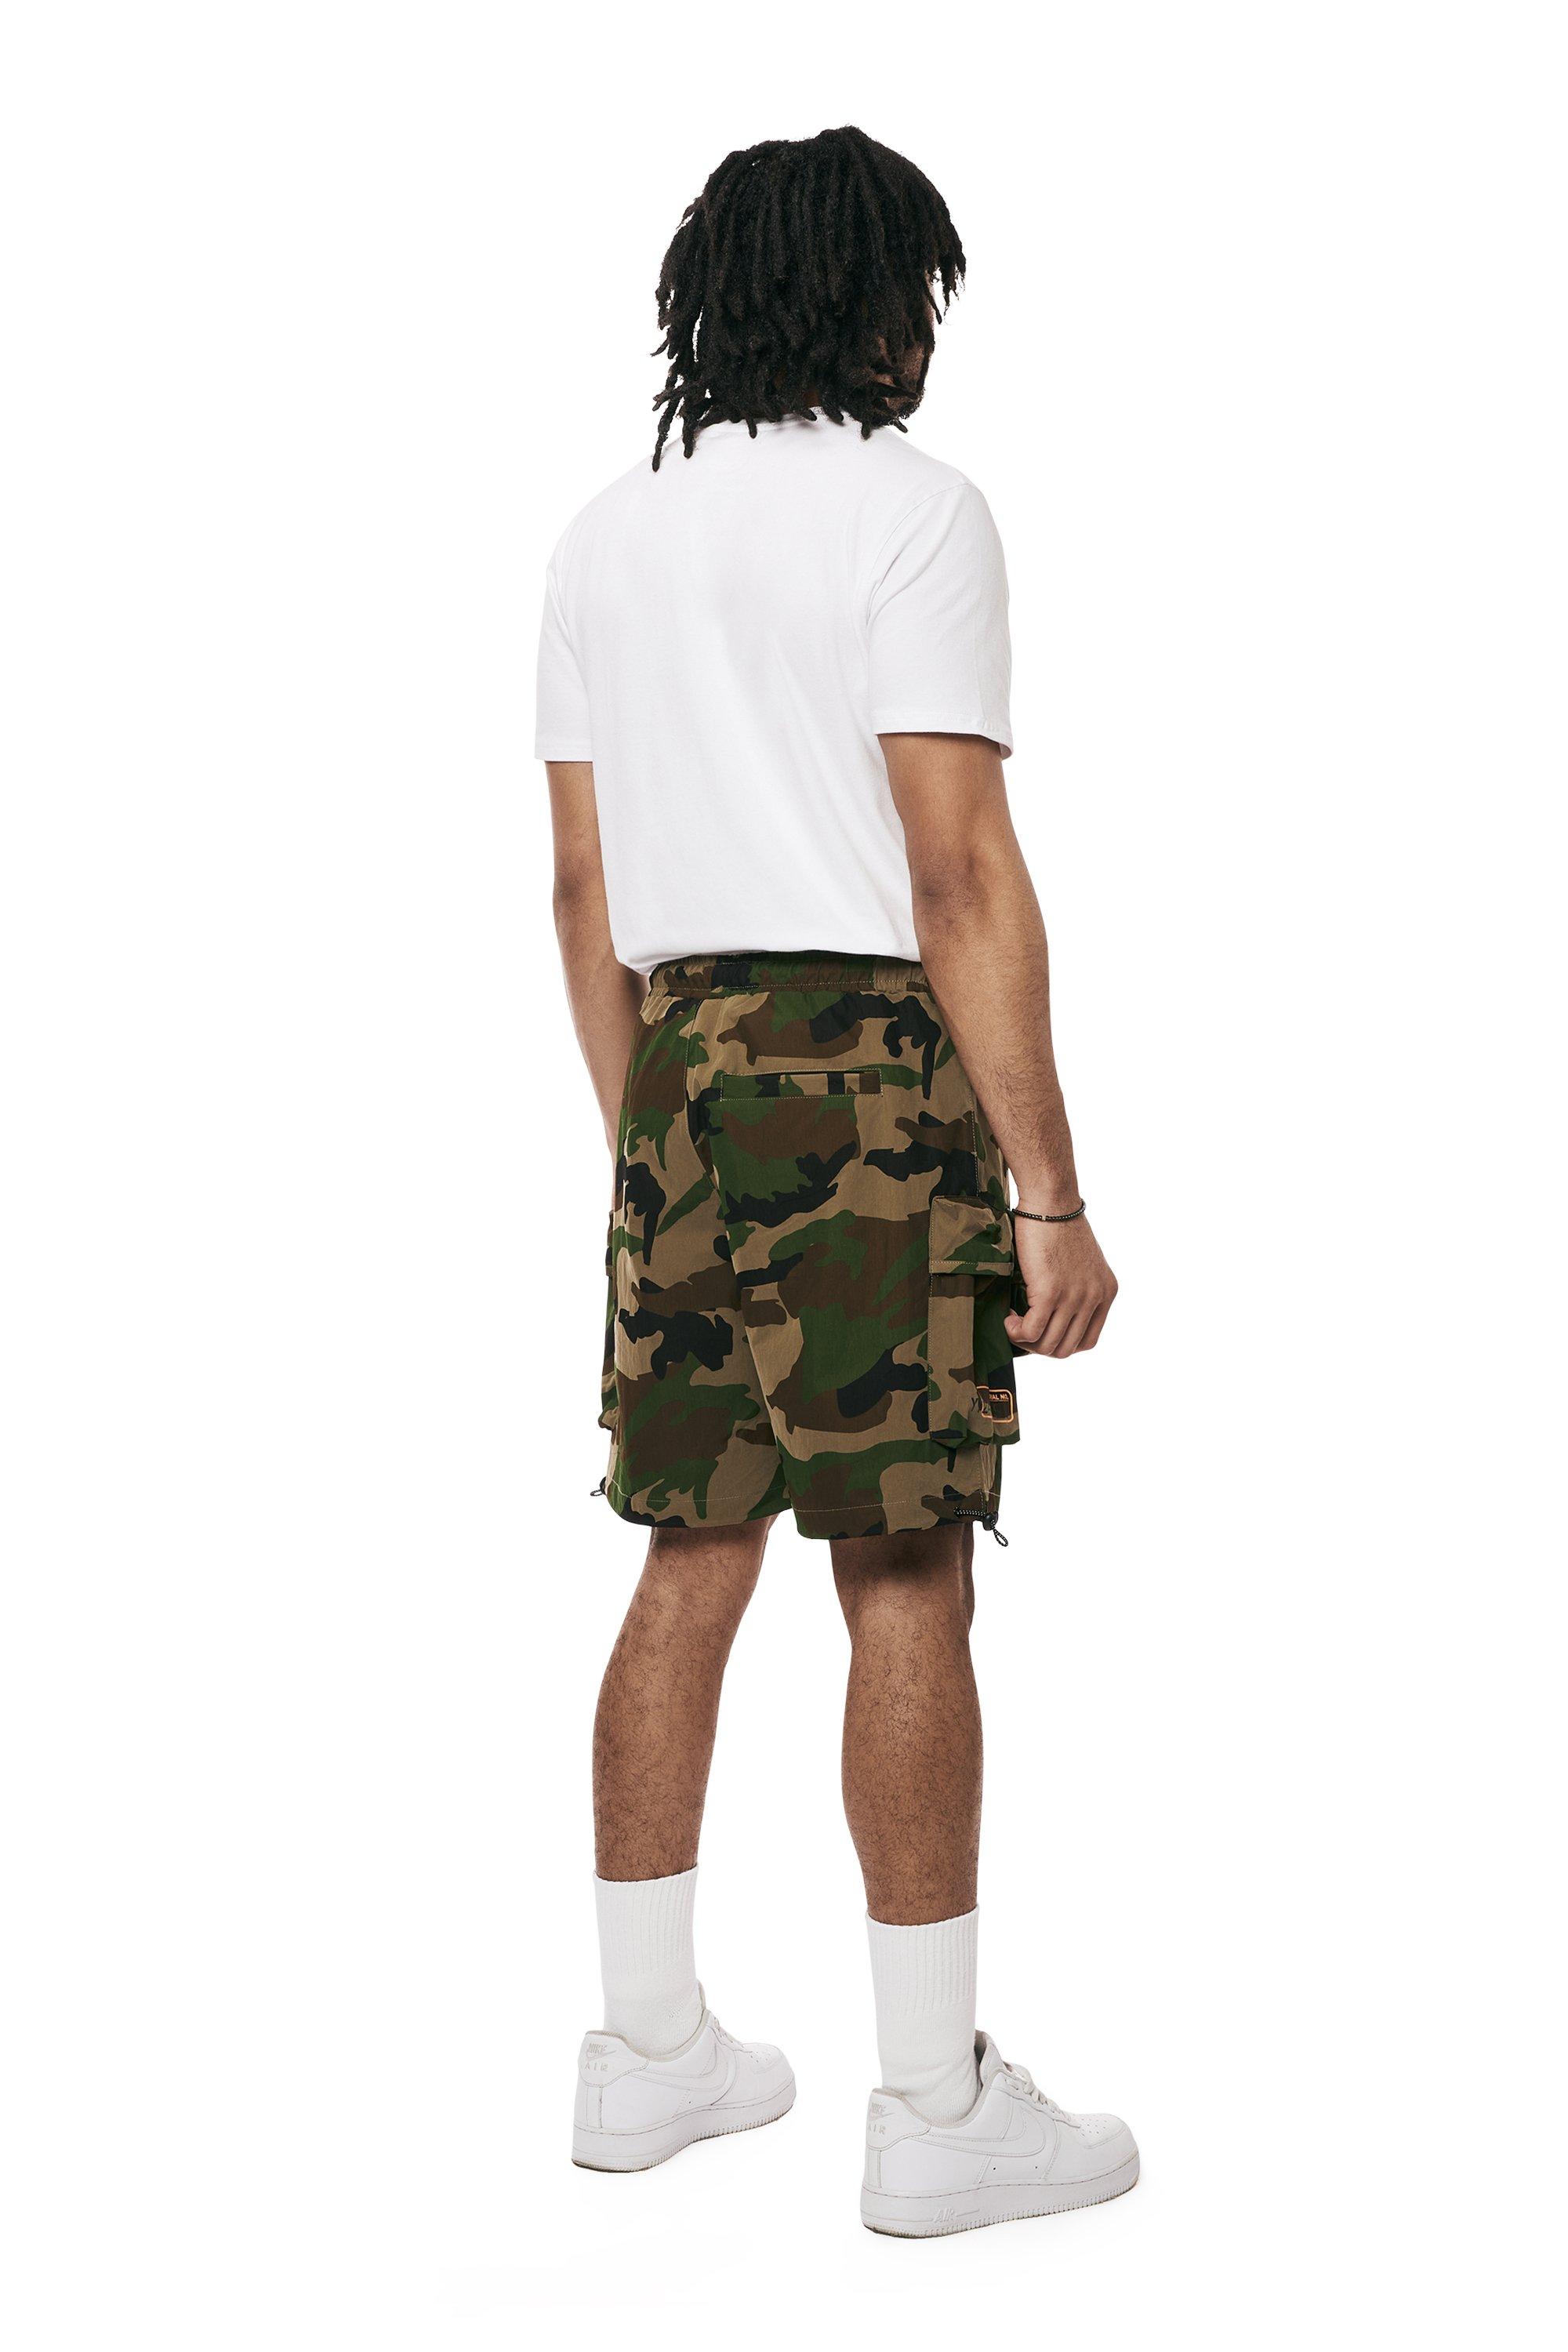 Smoke Rise Men's Nylon Cargo Shorts - Camo, Camouflage, Size: XXL